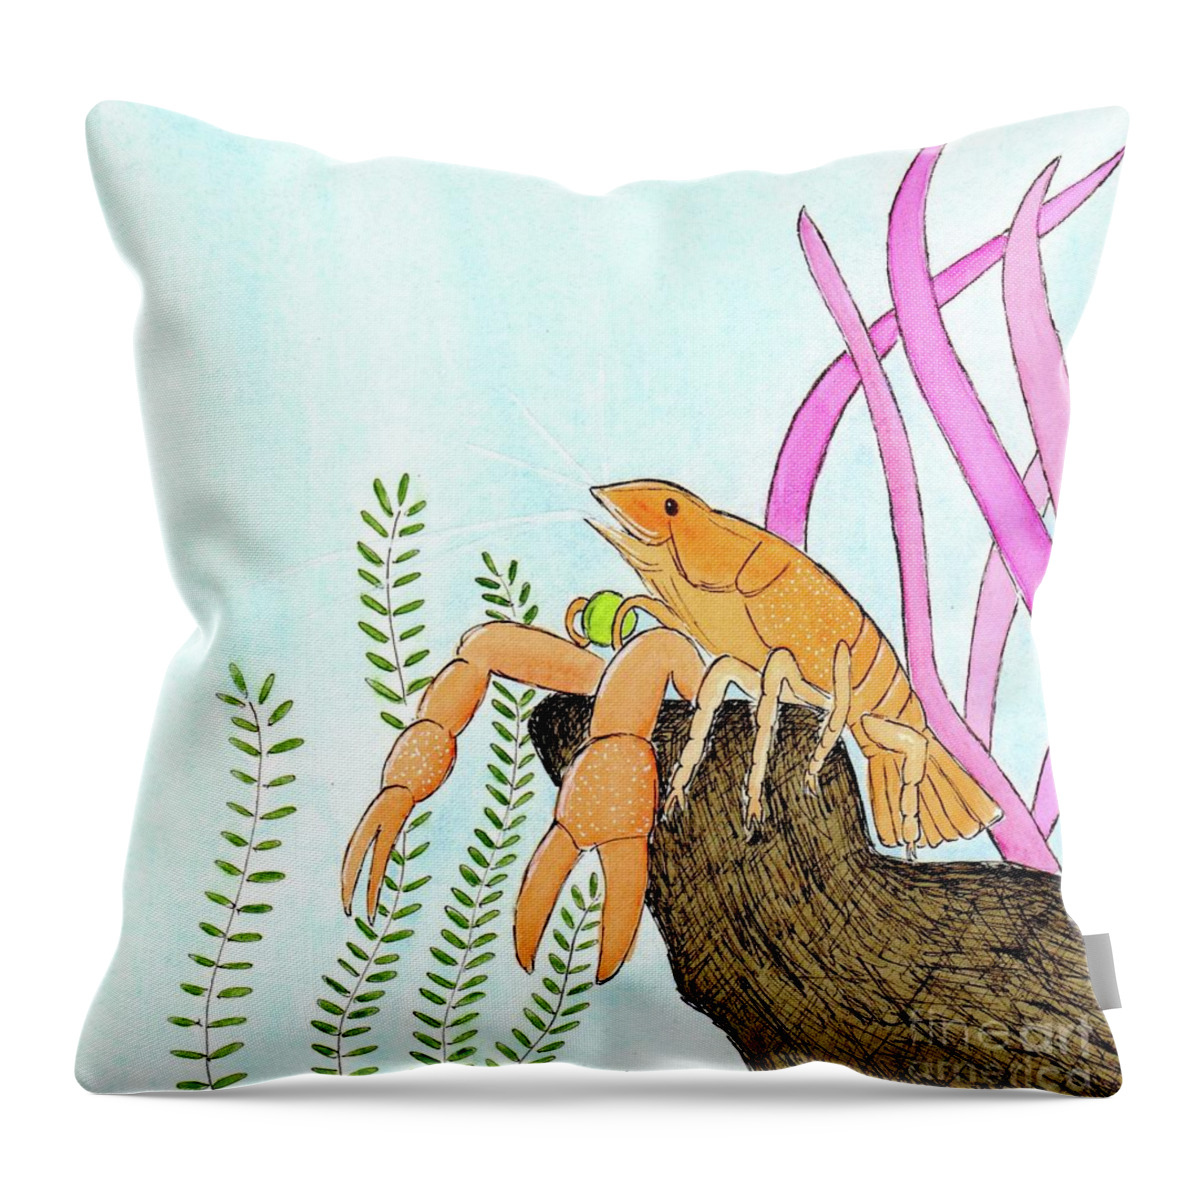 Aquarium Throw Pillow featuring the painting Leo the Aquarium Lobster Enjoys a Pea by Donna Mibus